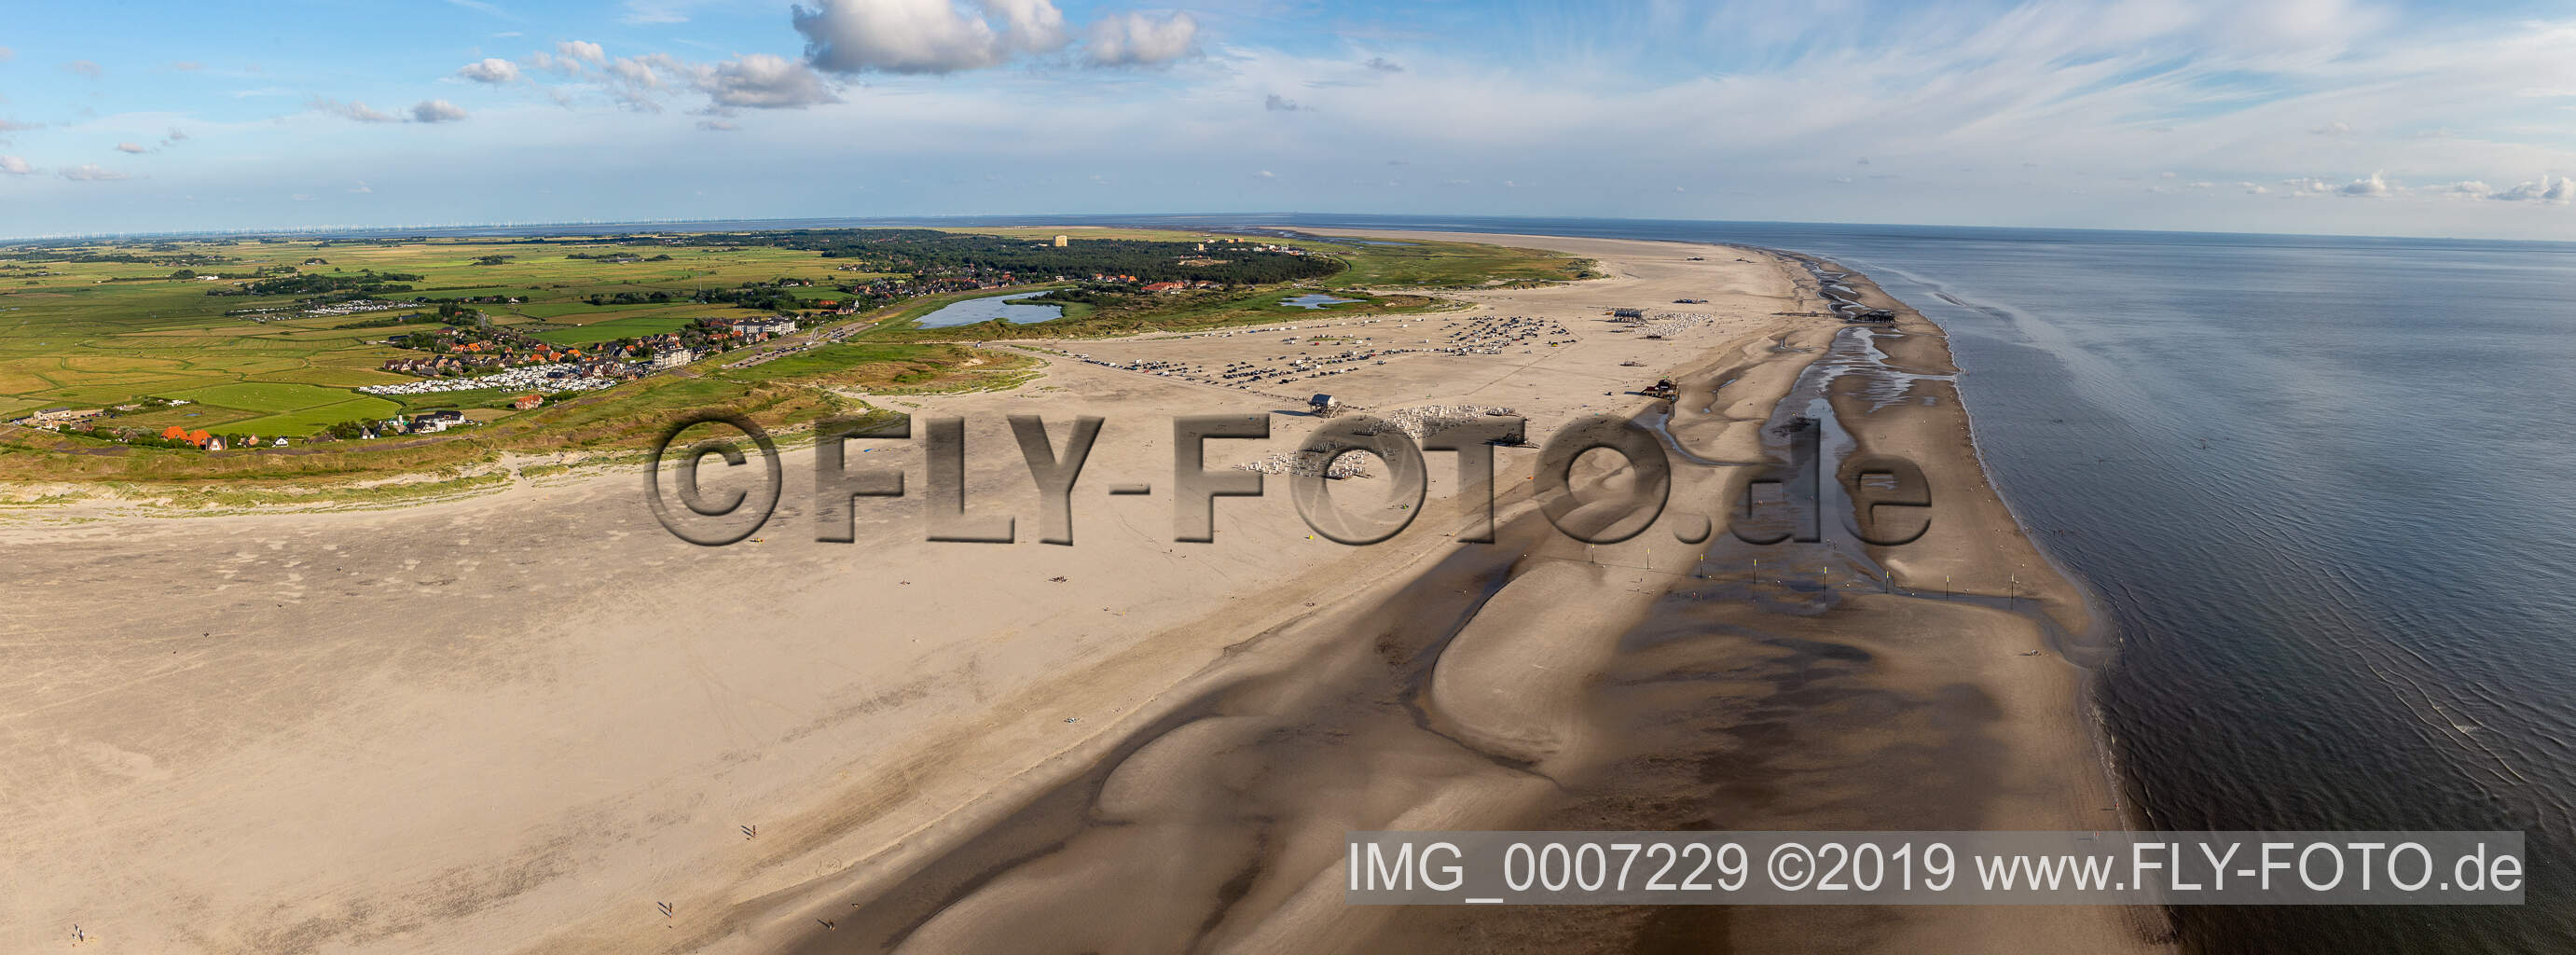 Sandstrand- Landschaft entlang des Küsten- Verlaufes der Nordsee in Sankt Peter-Ording im Bundesland Schleswig-Holstein, Deutschland